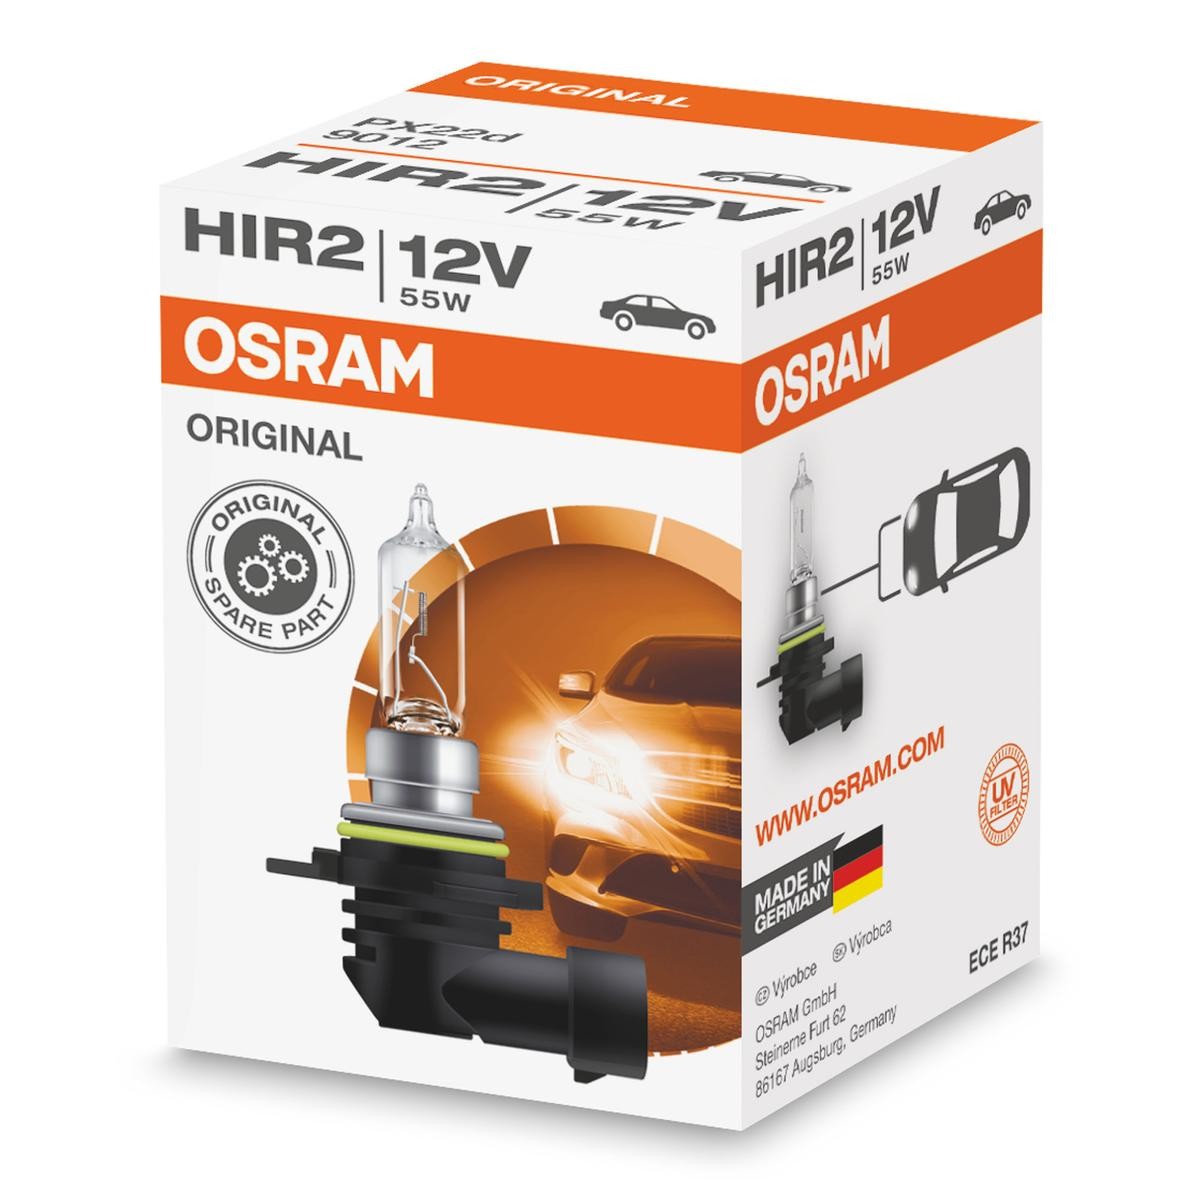 OSRAM 9012 CHRYSLER Fernlicht HIR2 12V 55W3200K Halogen ORIGINAL